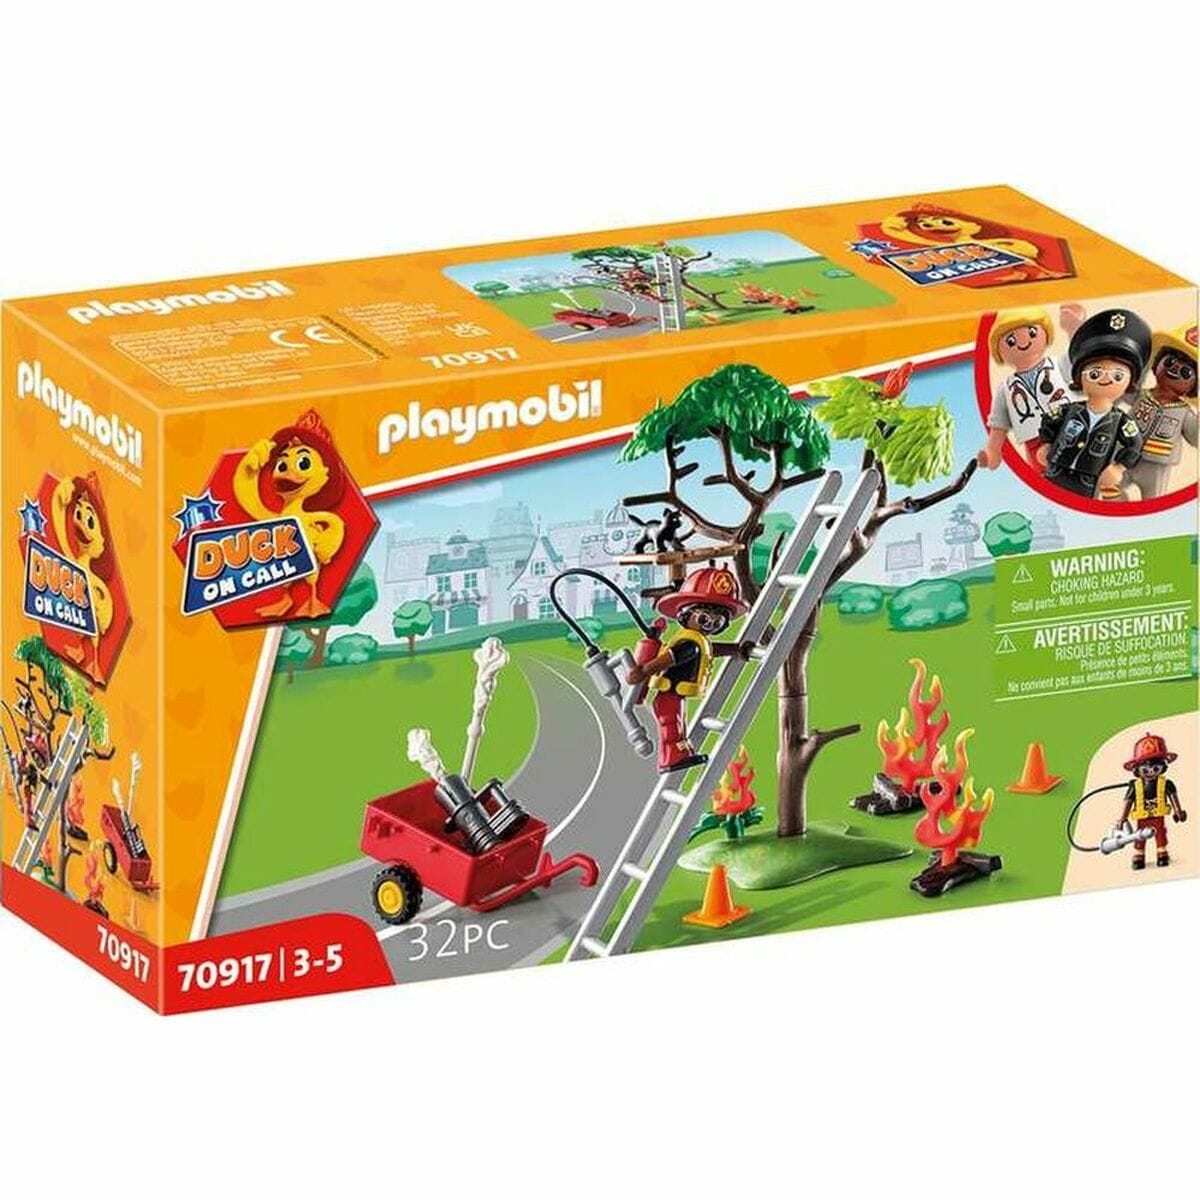 Playmobil Spielzeug | Kostüme > Spielzeug und Spiele > Weiteres spielzeug Playset Playmobil 70917 Feuerwehrmann Katze 70917 (32 pcs)